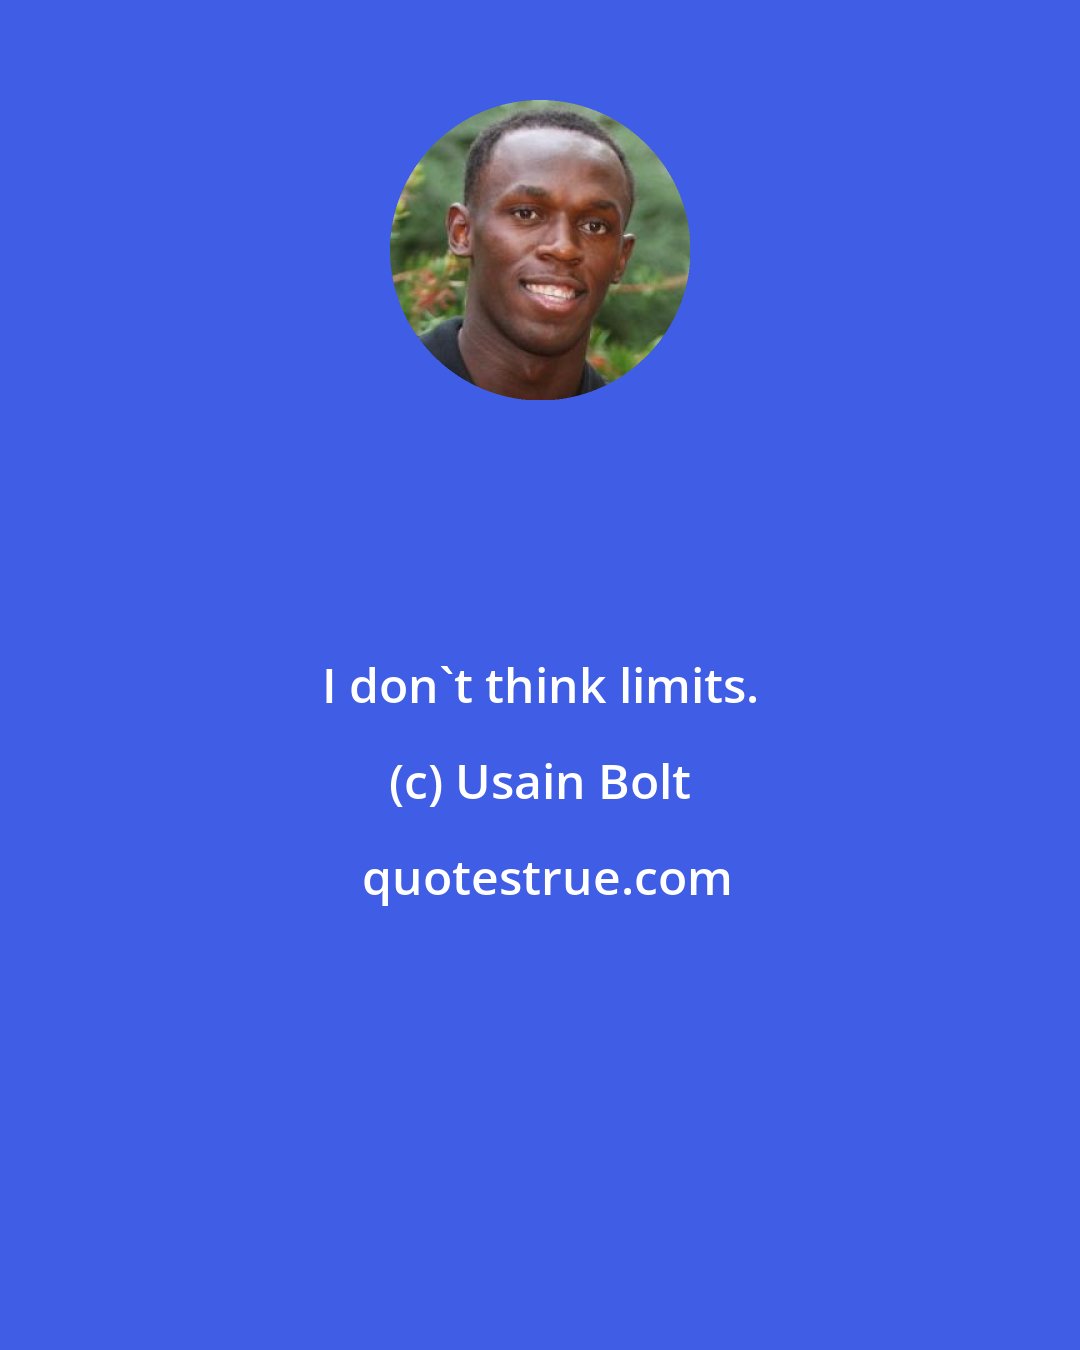 Usain Bolt: I don't think limits.